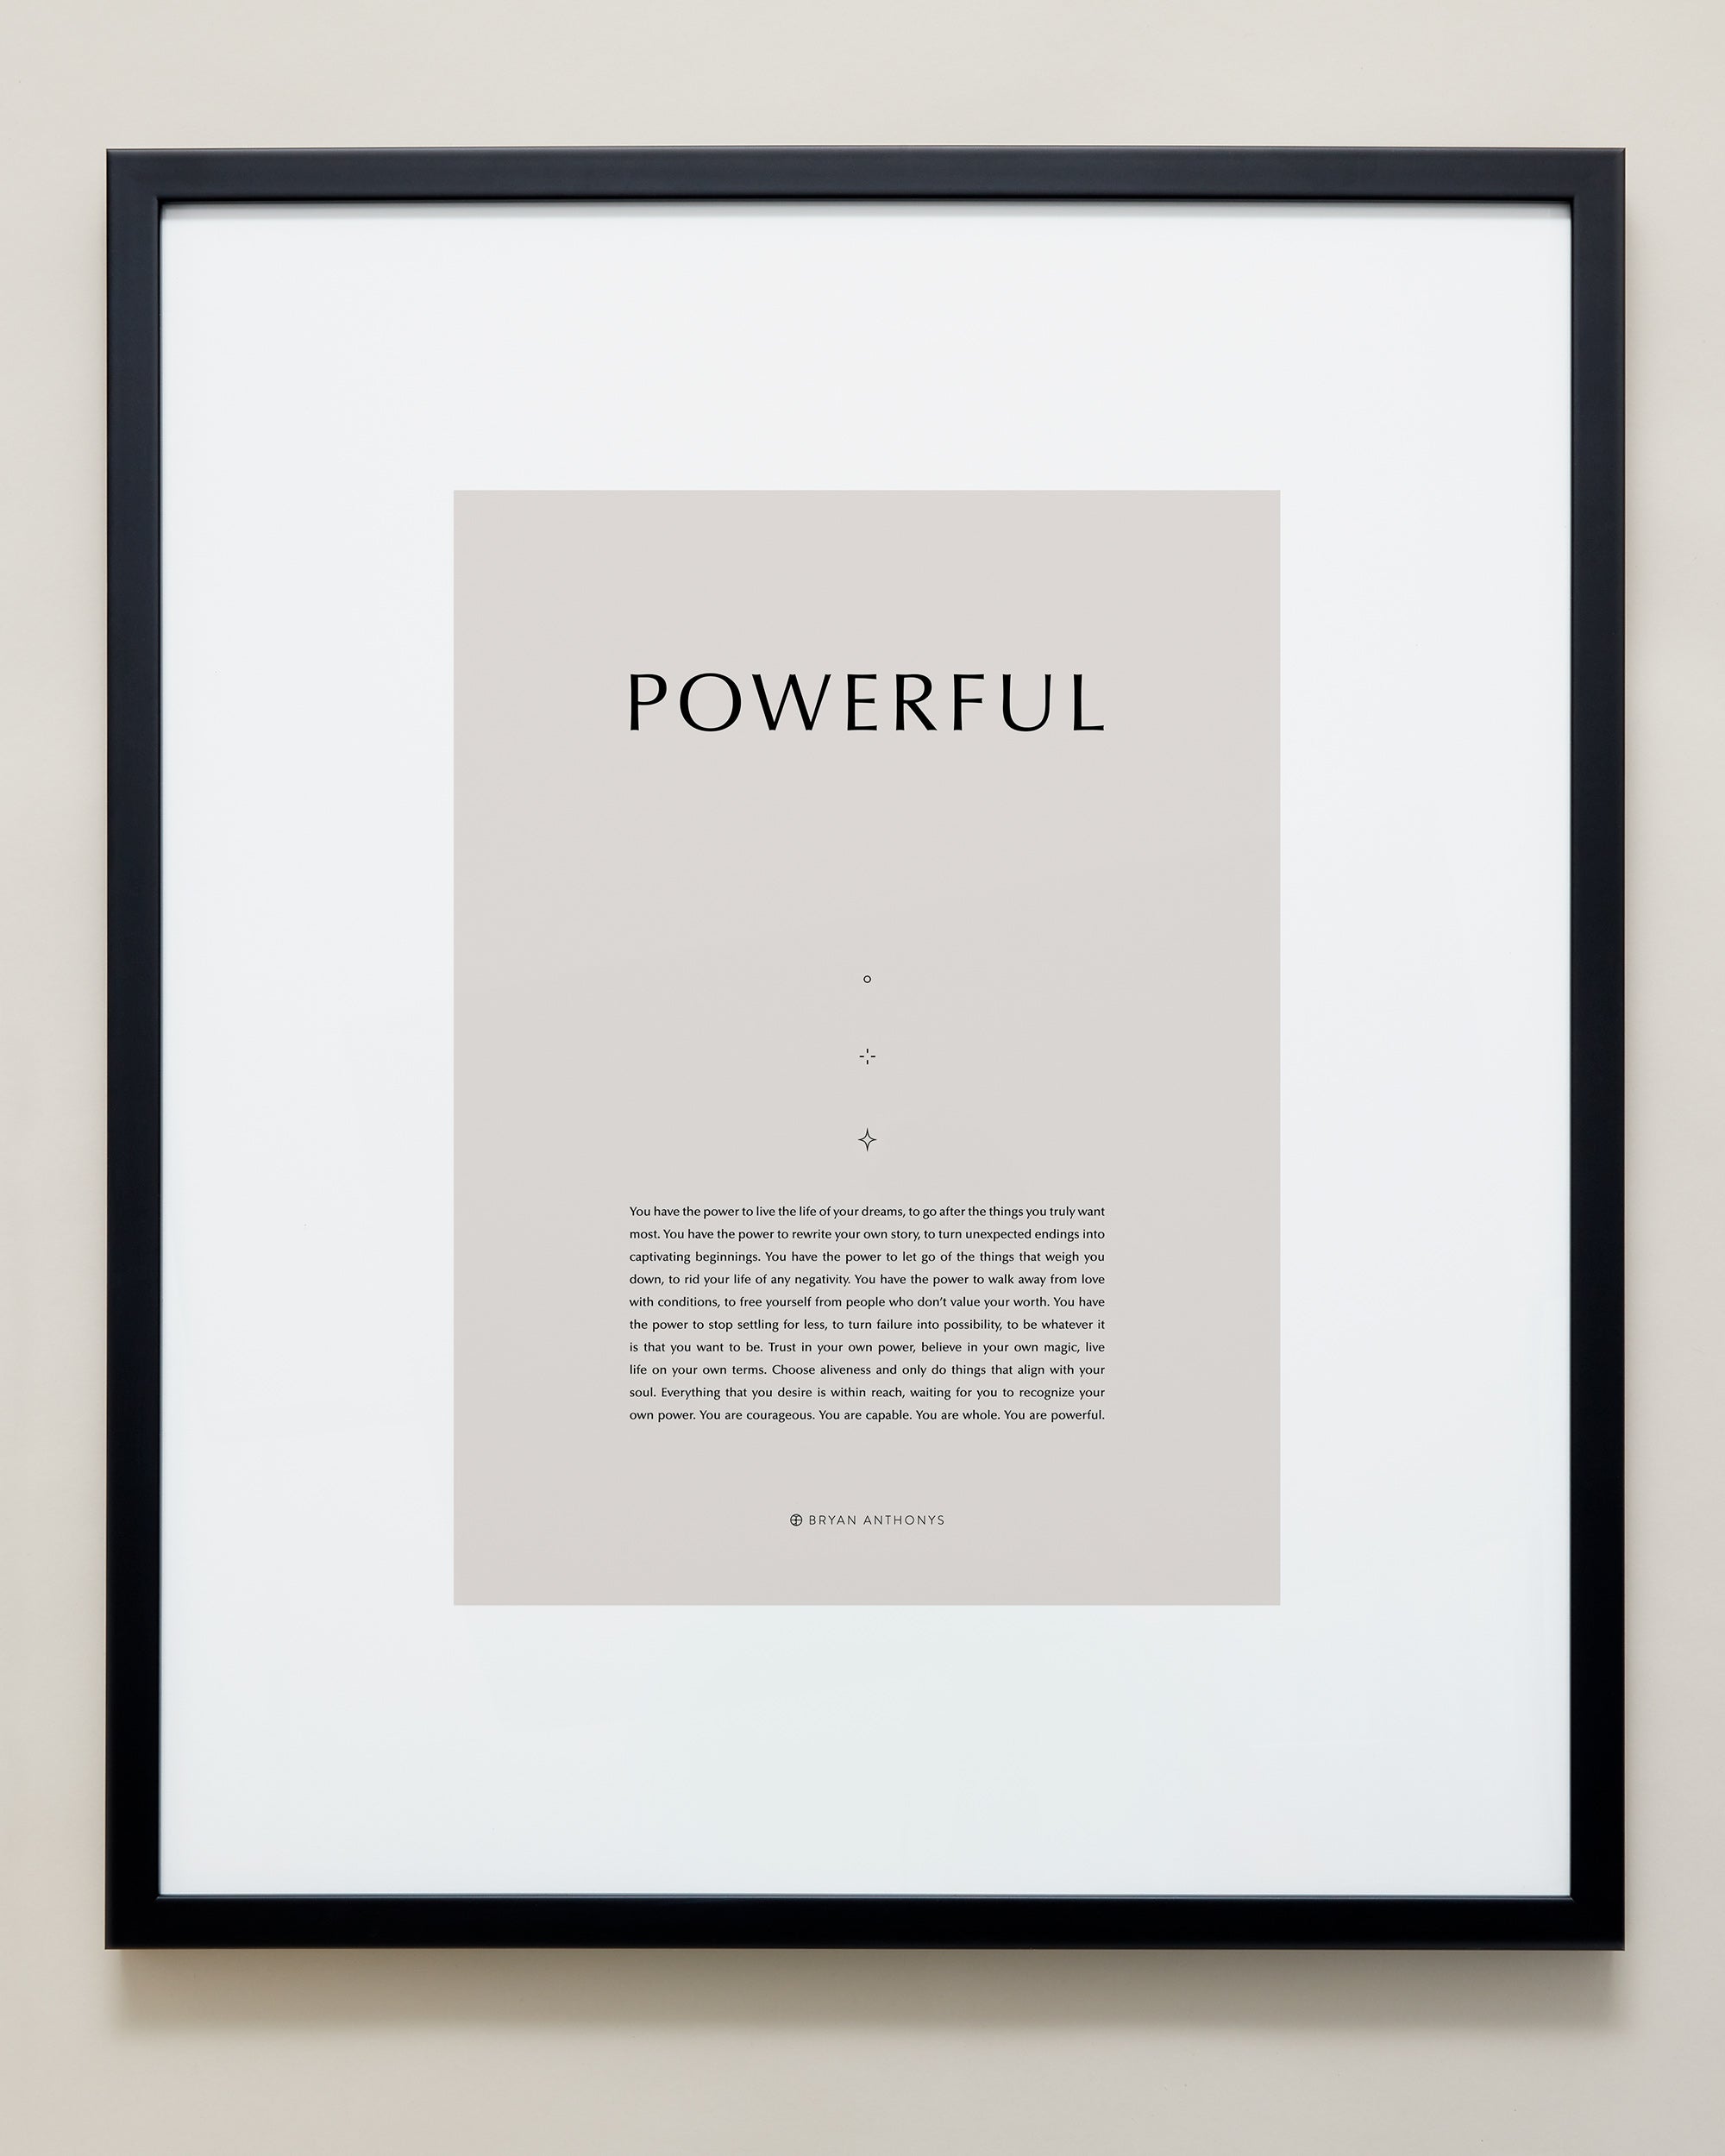 Bryan Anthonys Home Decor Purposeful Prints Powerful Iconic Framed Print Tan Art with Black Frame 20x24